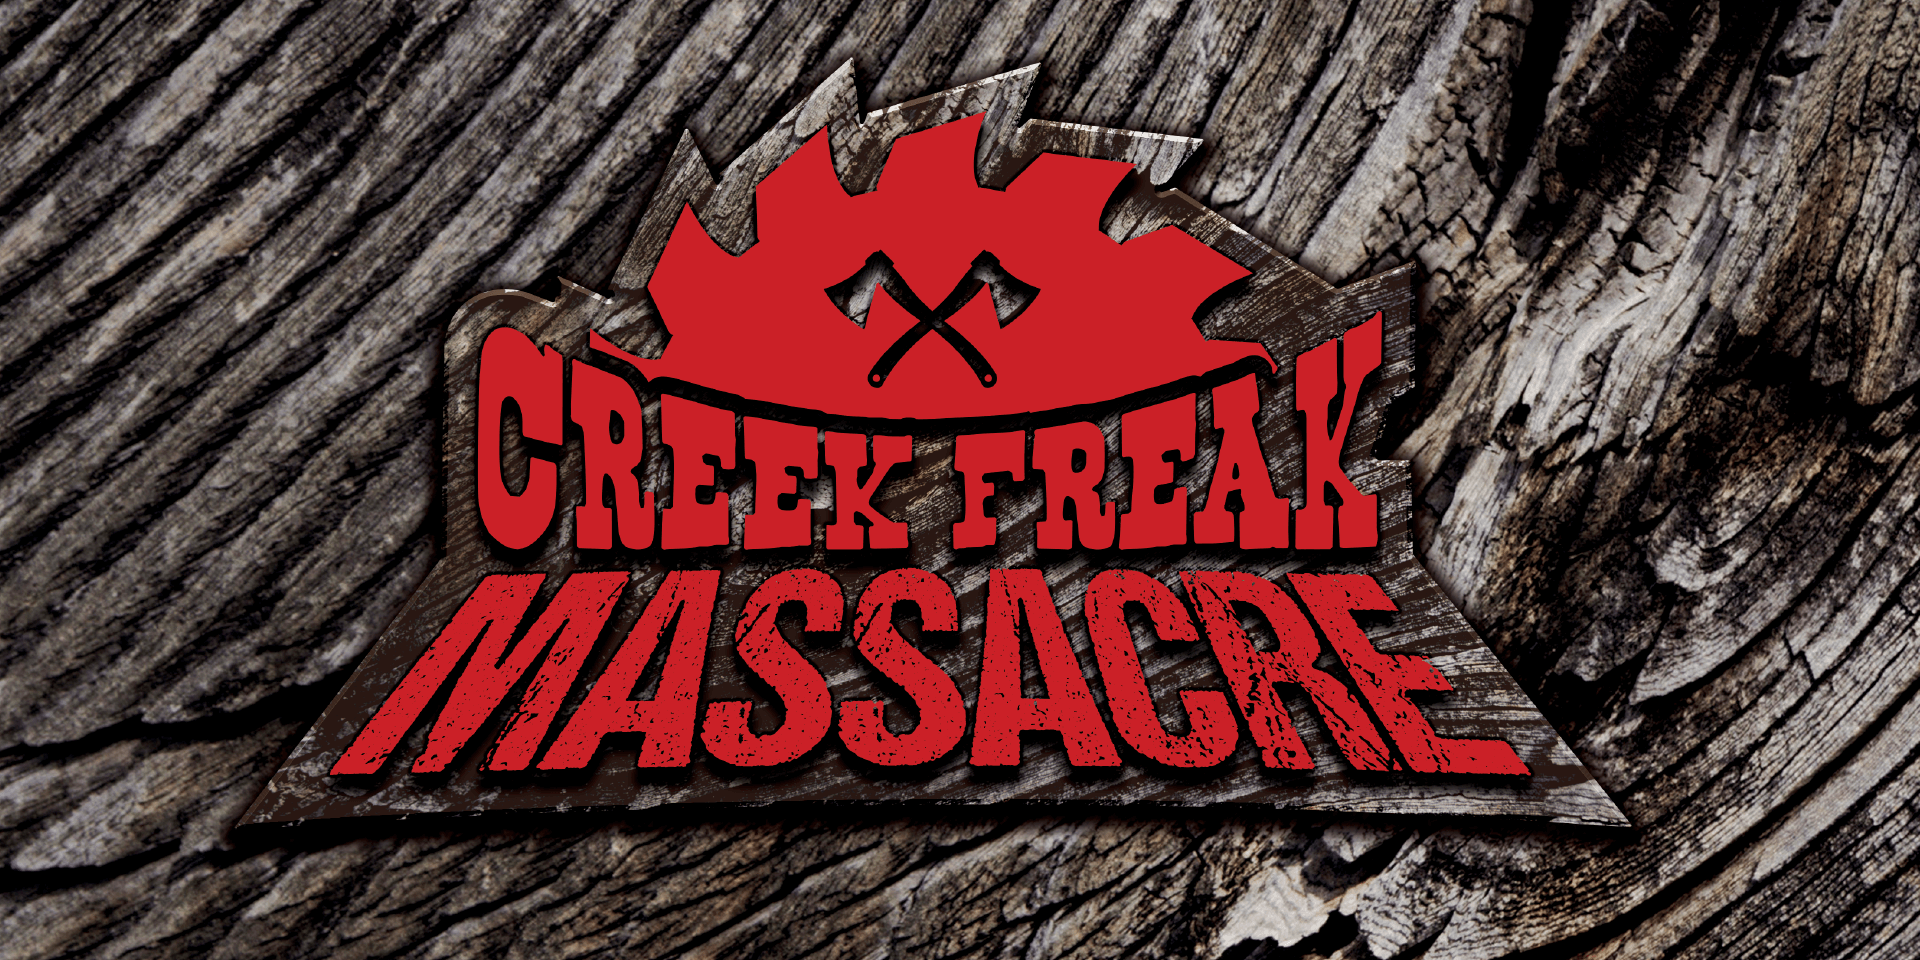 Creek Freak Massacre Scare Maze